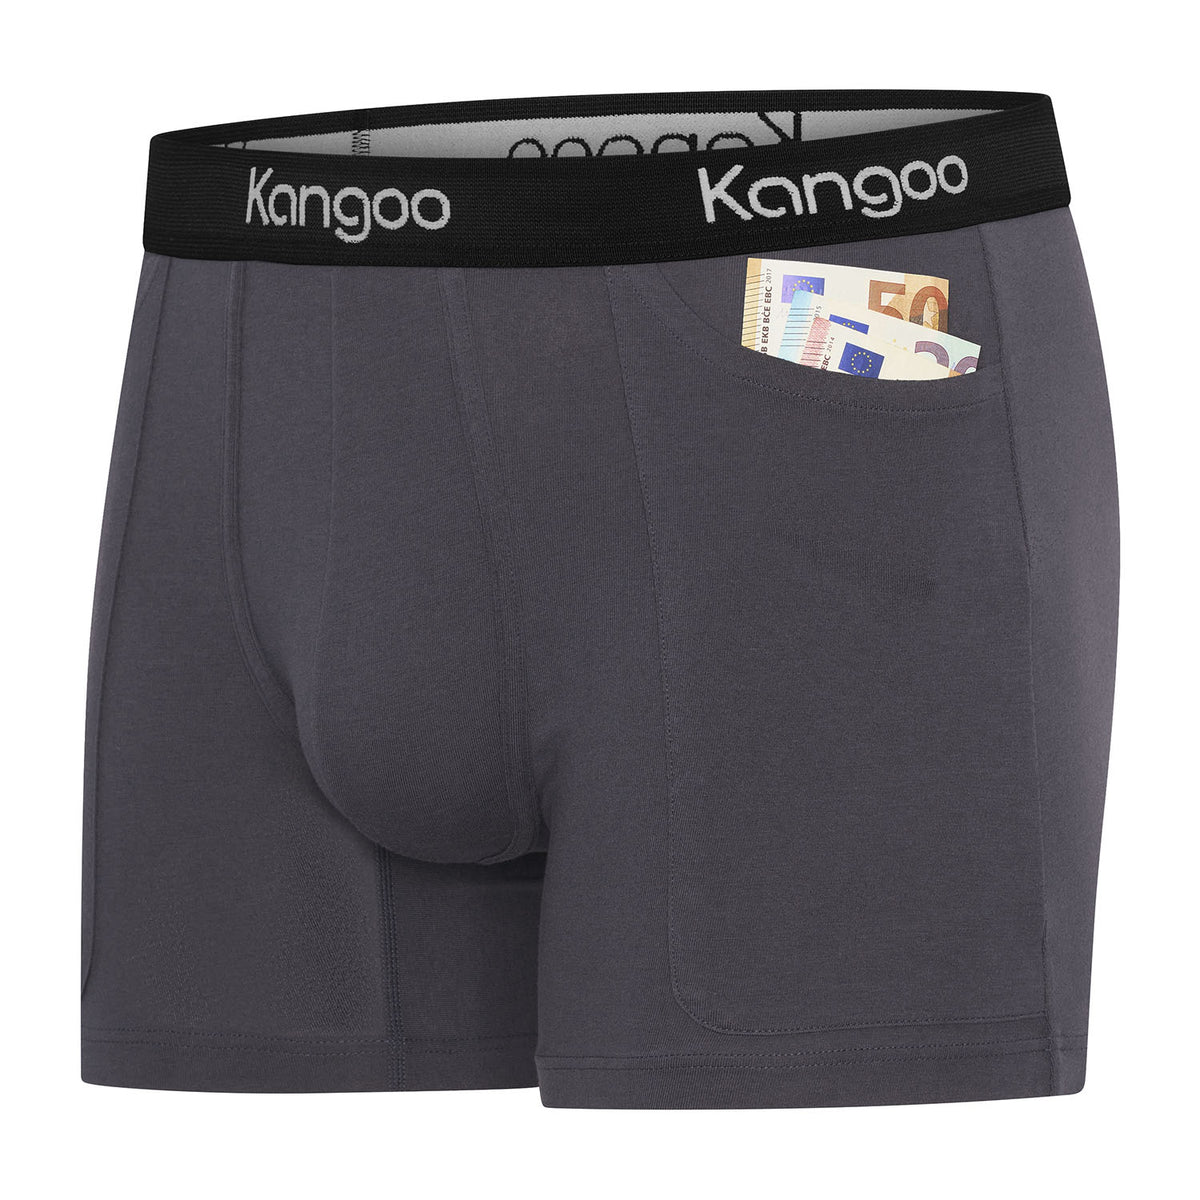 Kangoo | All Color Light | 3-pack